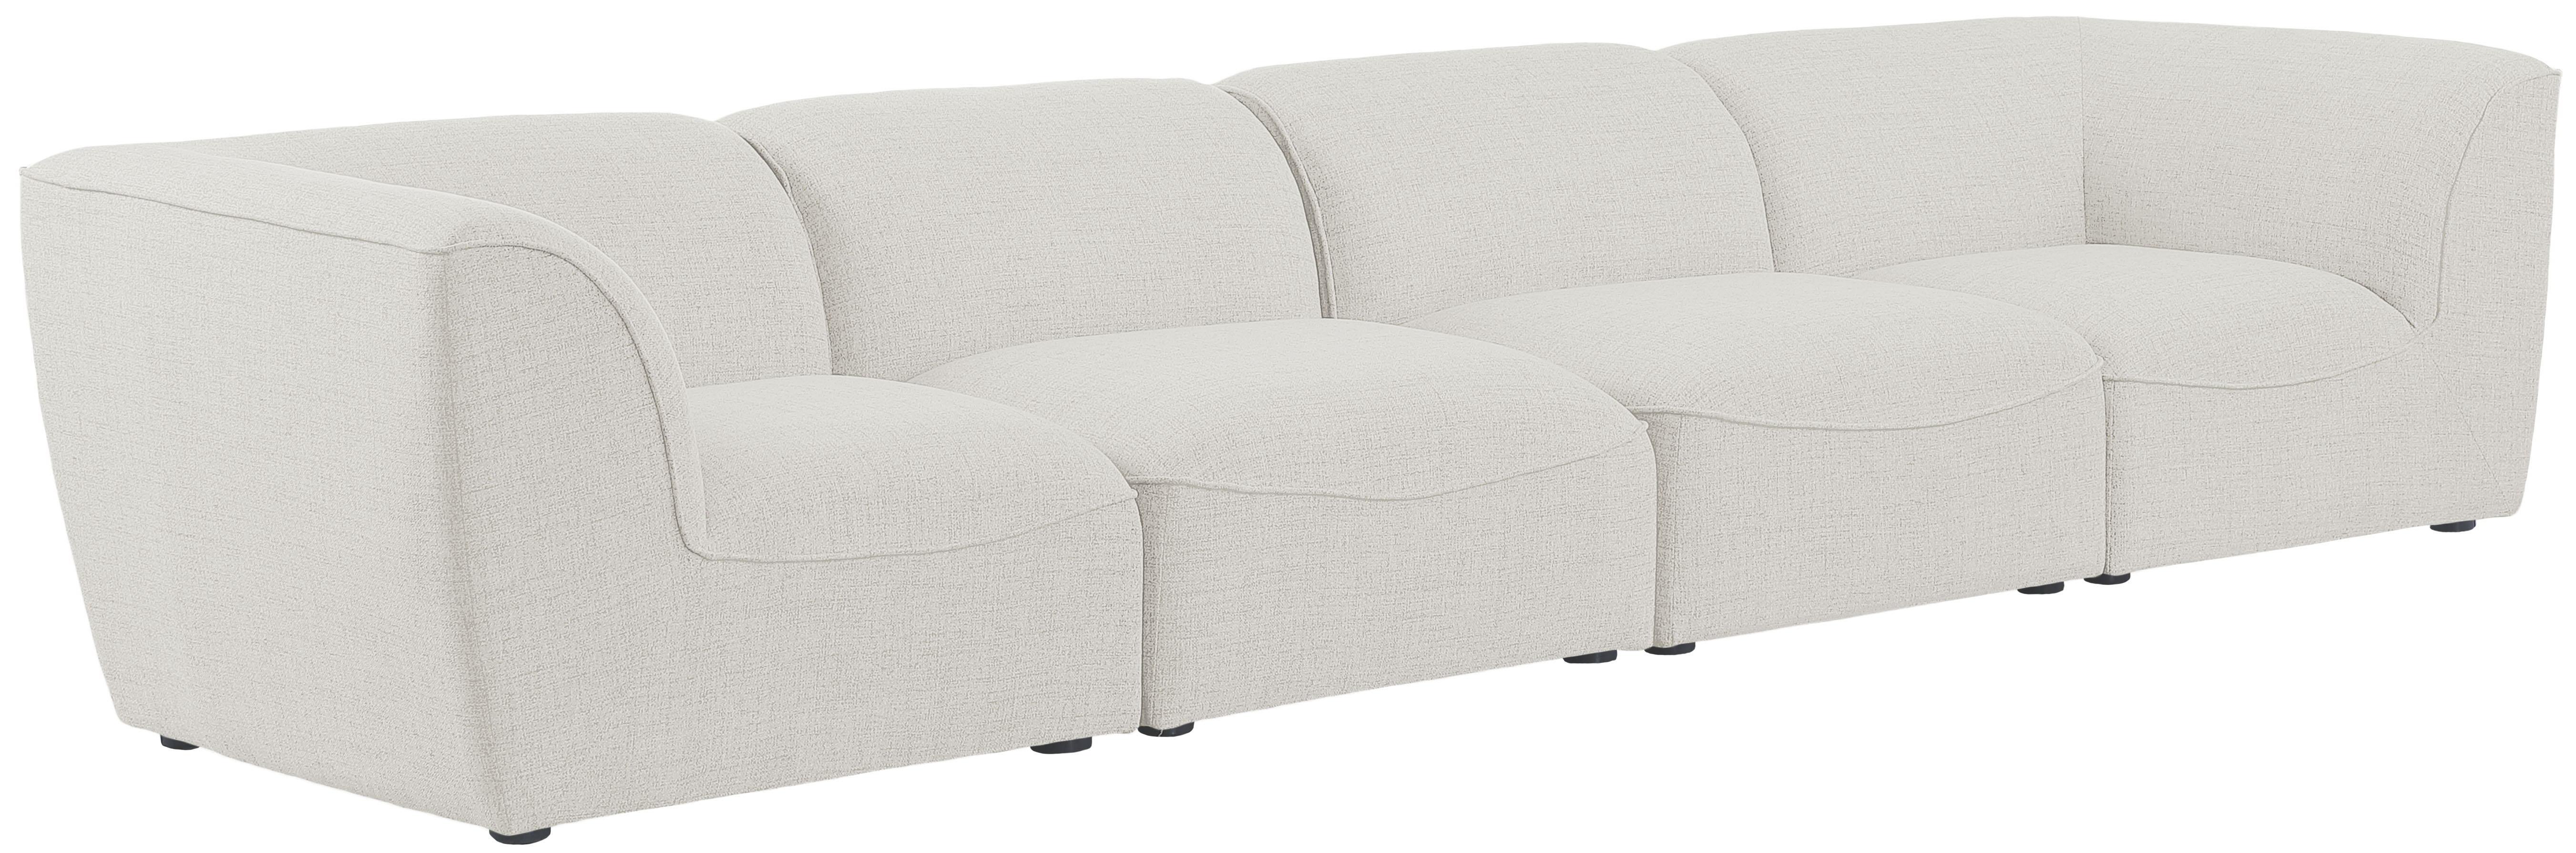 Meridian Furniture - Miramar - Modular Sofa - 4 Seats - 5th Avenue Furniture